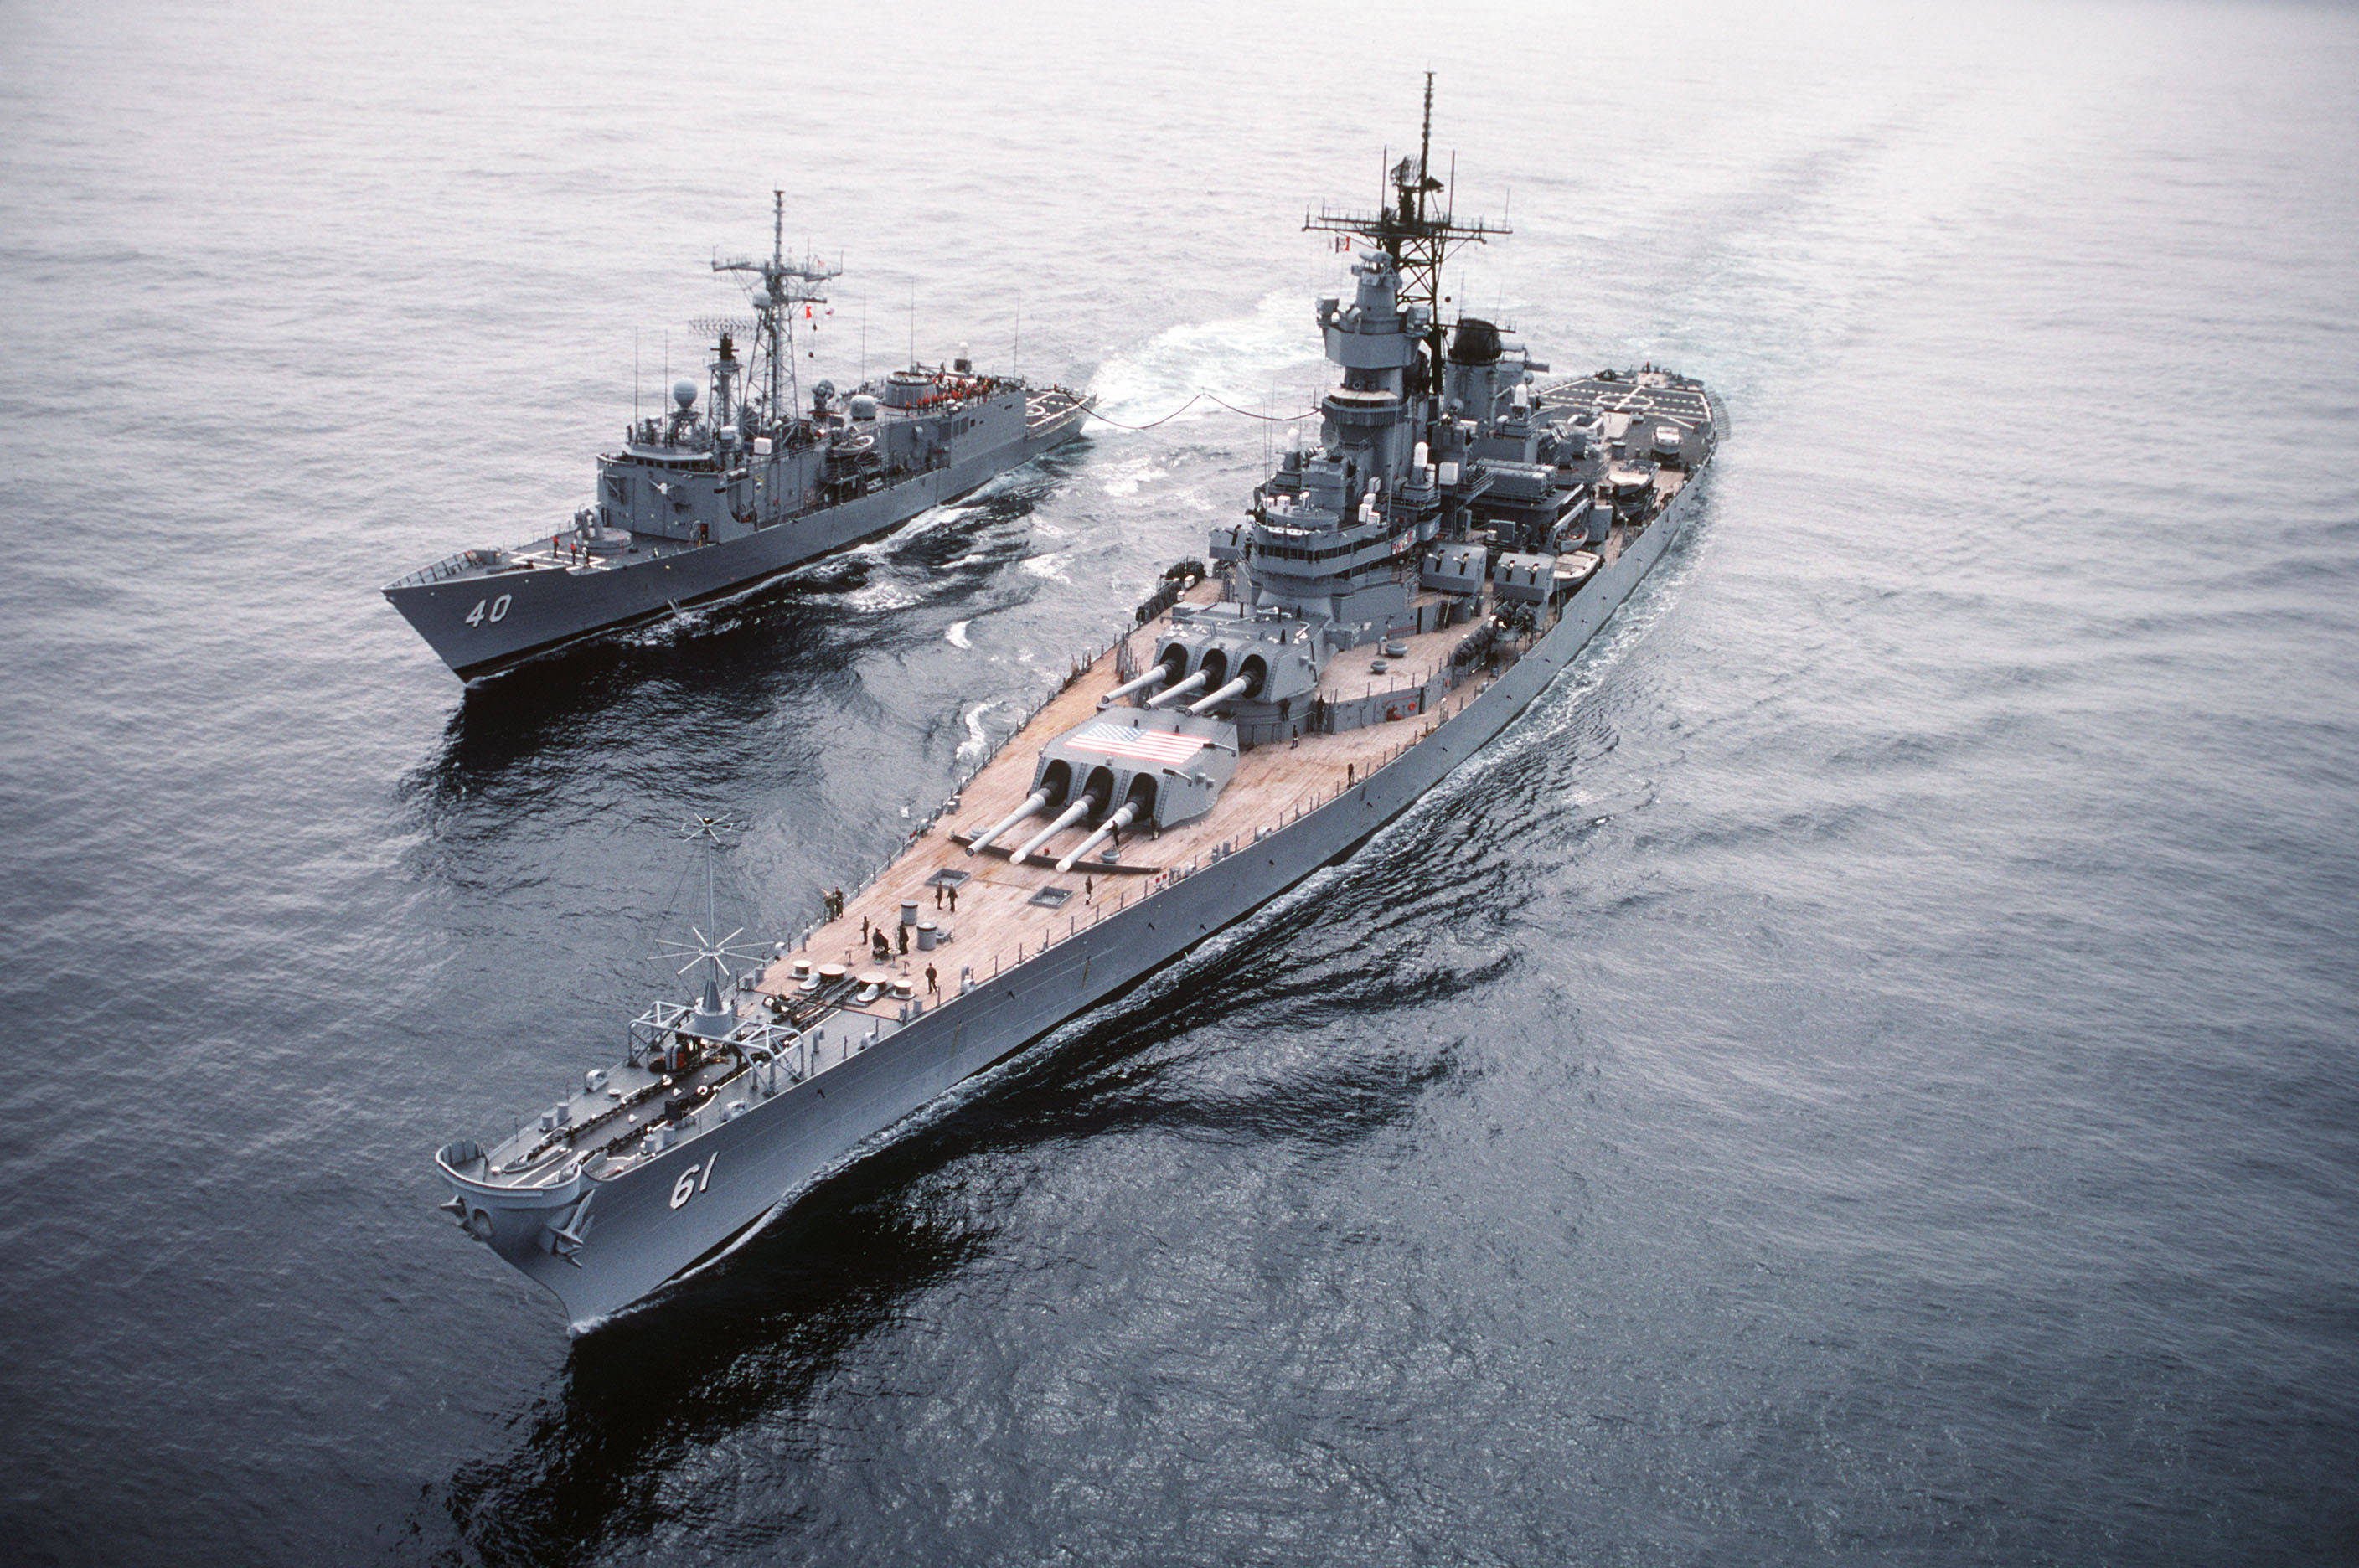 battleship wallpaper,vehicle,naval ship,warship,ship,battleship